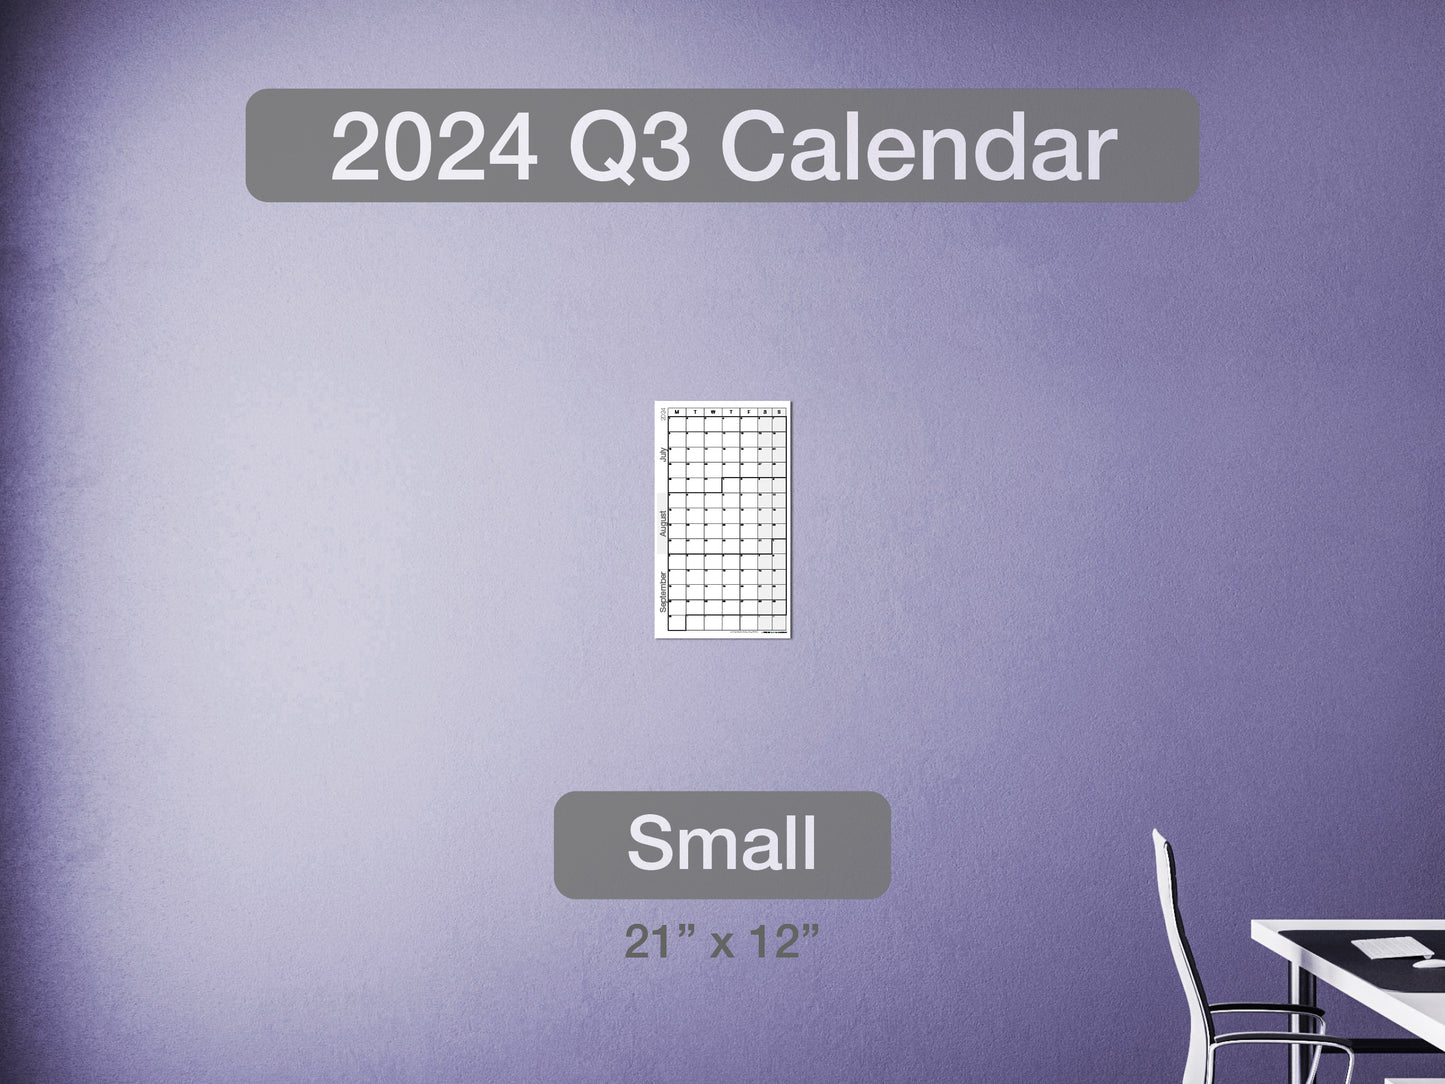 2024 Q3 Calendar Small